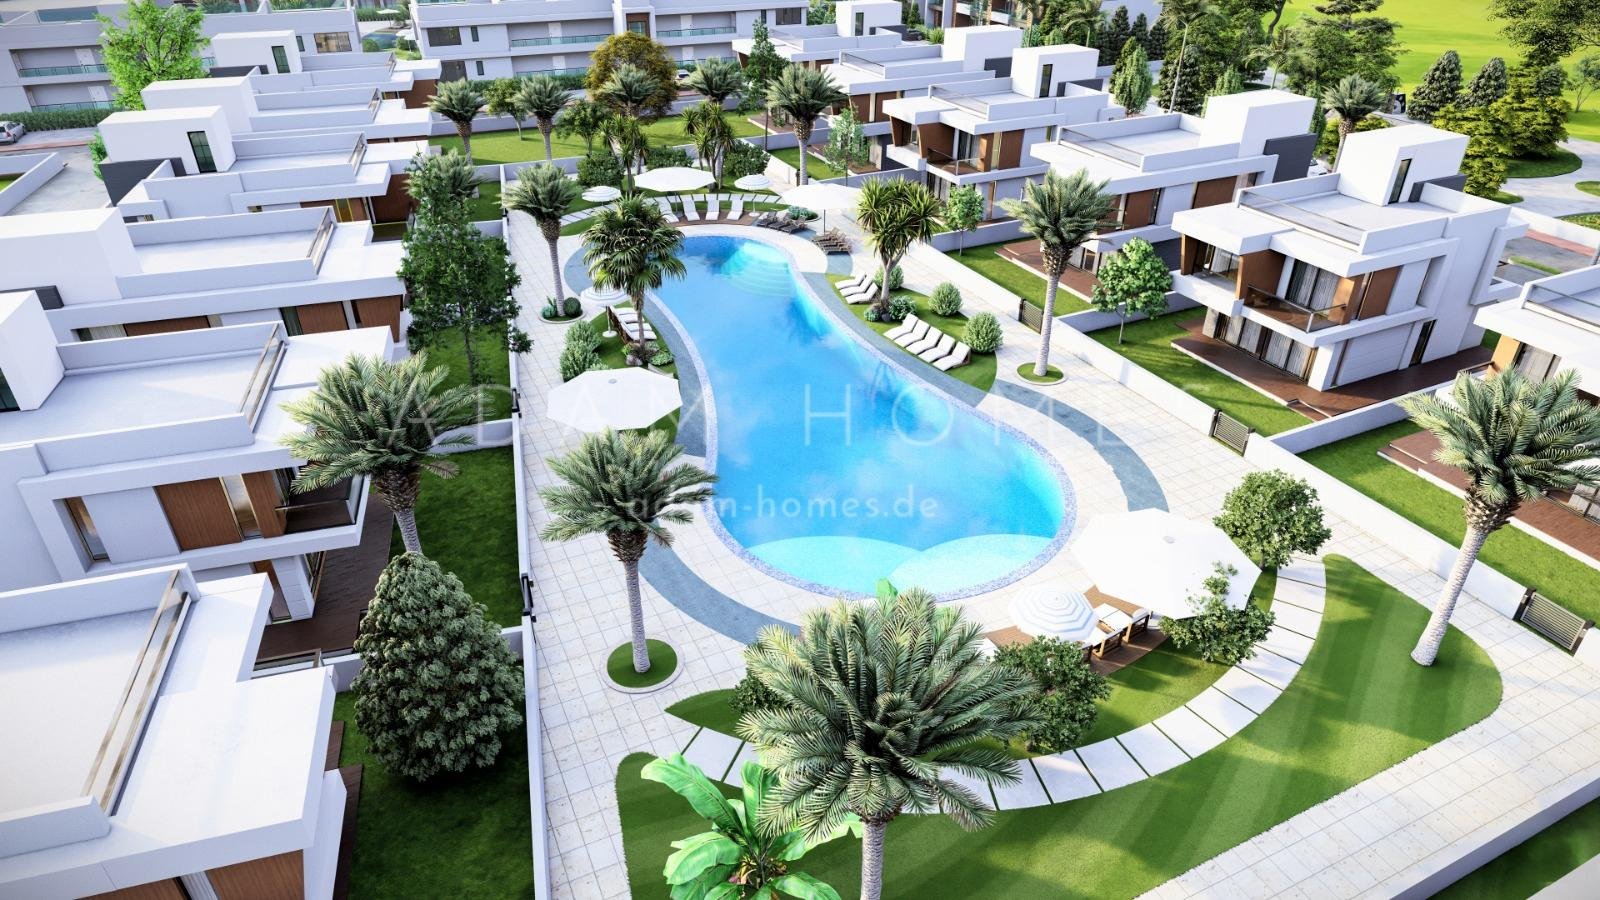 Villa 3+1 apartments in a developing region